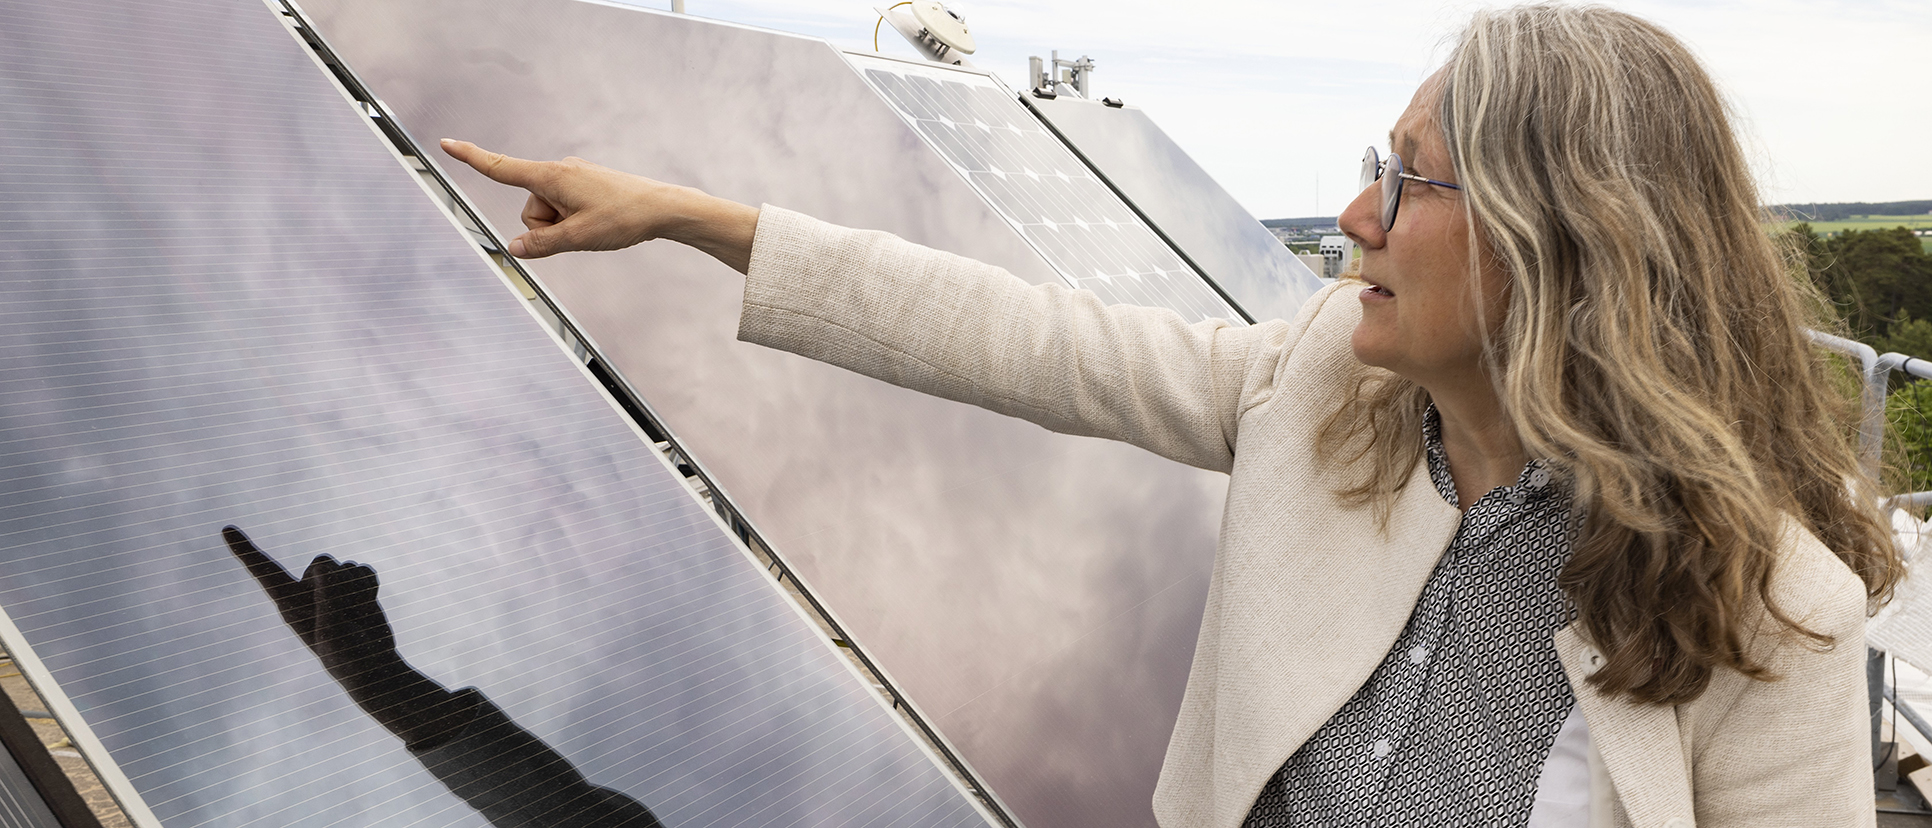 Marika Edoff pointing at a solar panel.